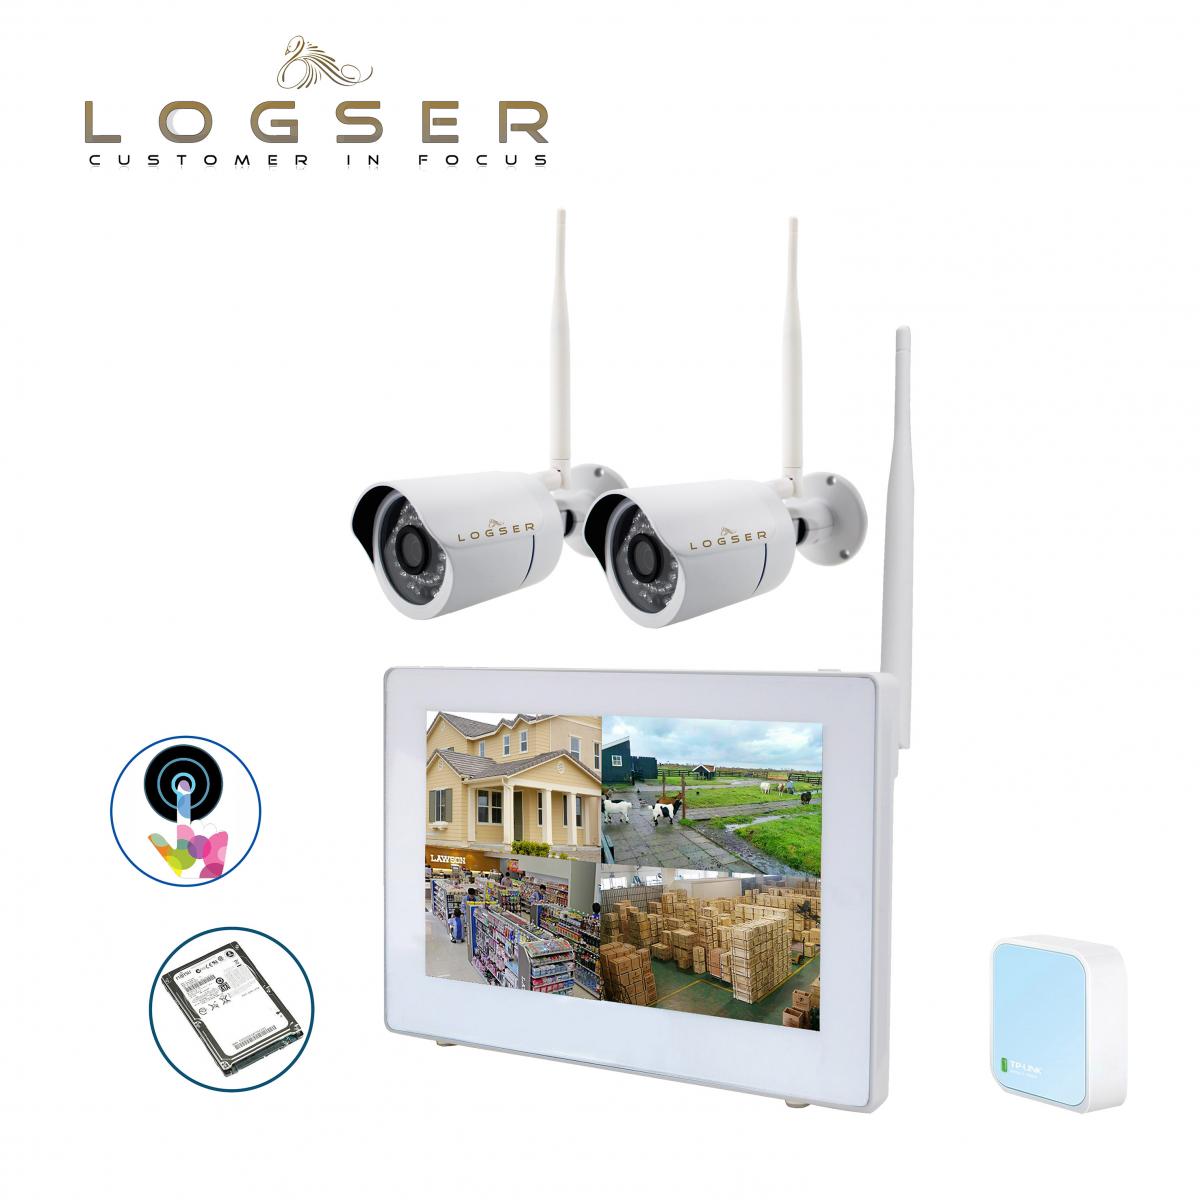 LOGSER AG - 9 Zoll Full-Touch inkl. Wifi Adapter, Funk Videoüberwachung HD 720p Echtzeit, 500GB SATA Festplatte, 2x Nachtsicht Kamera     